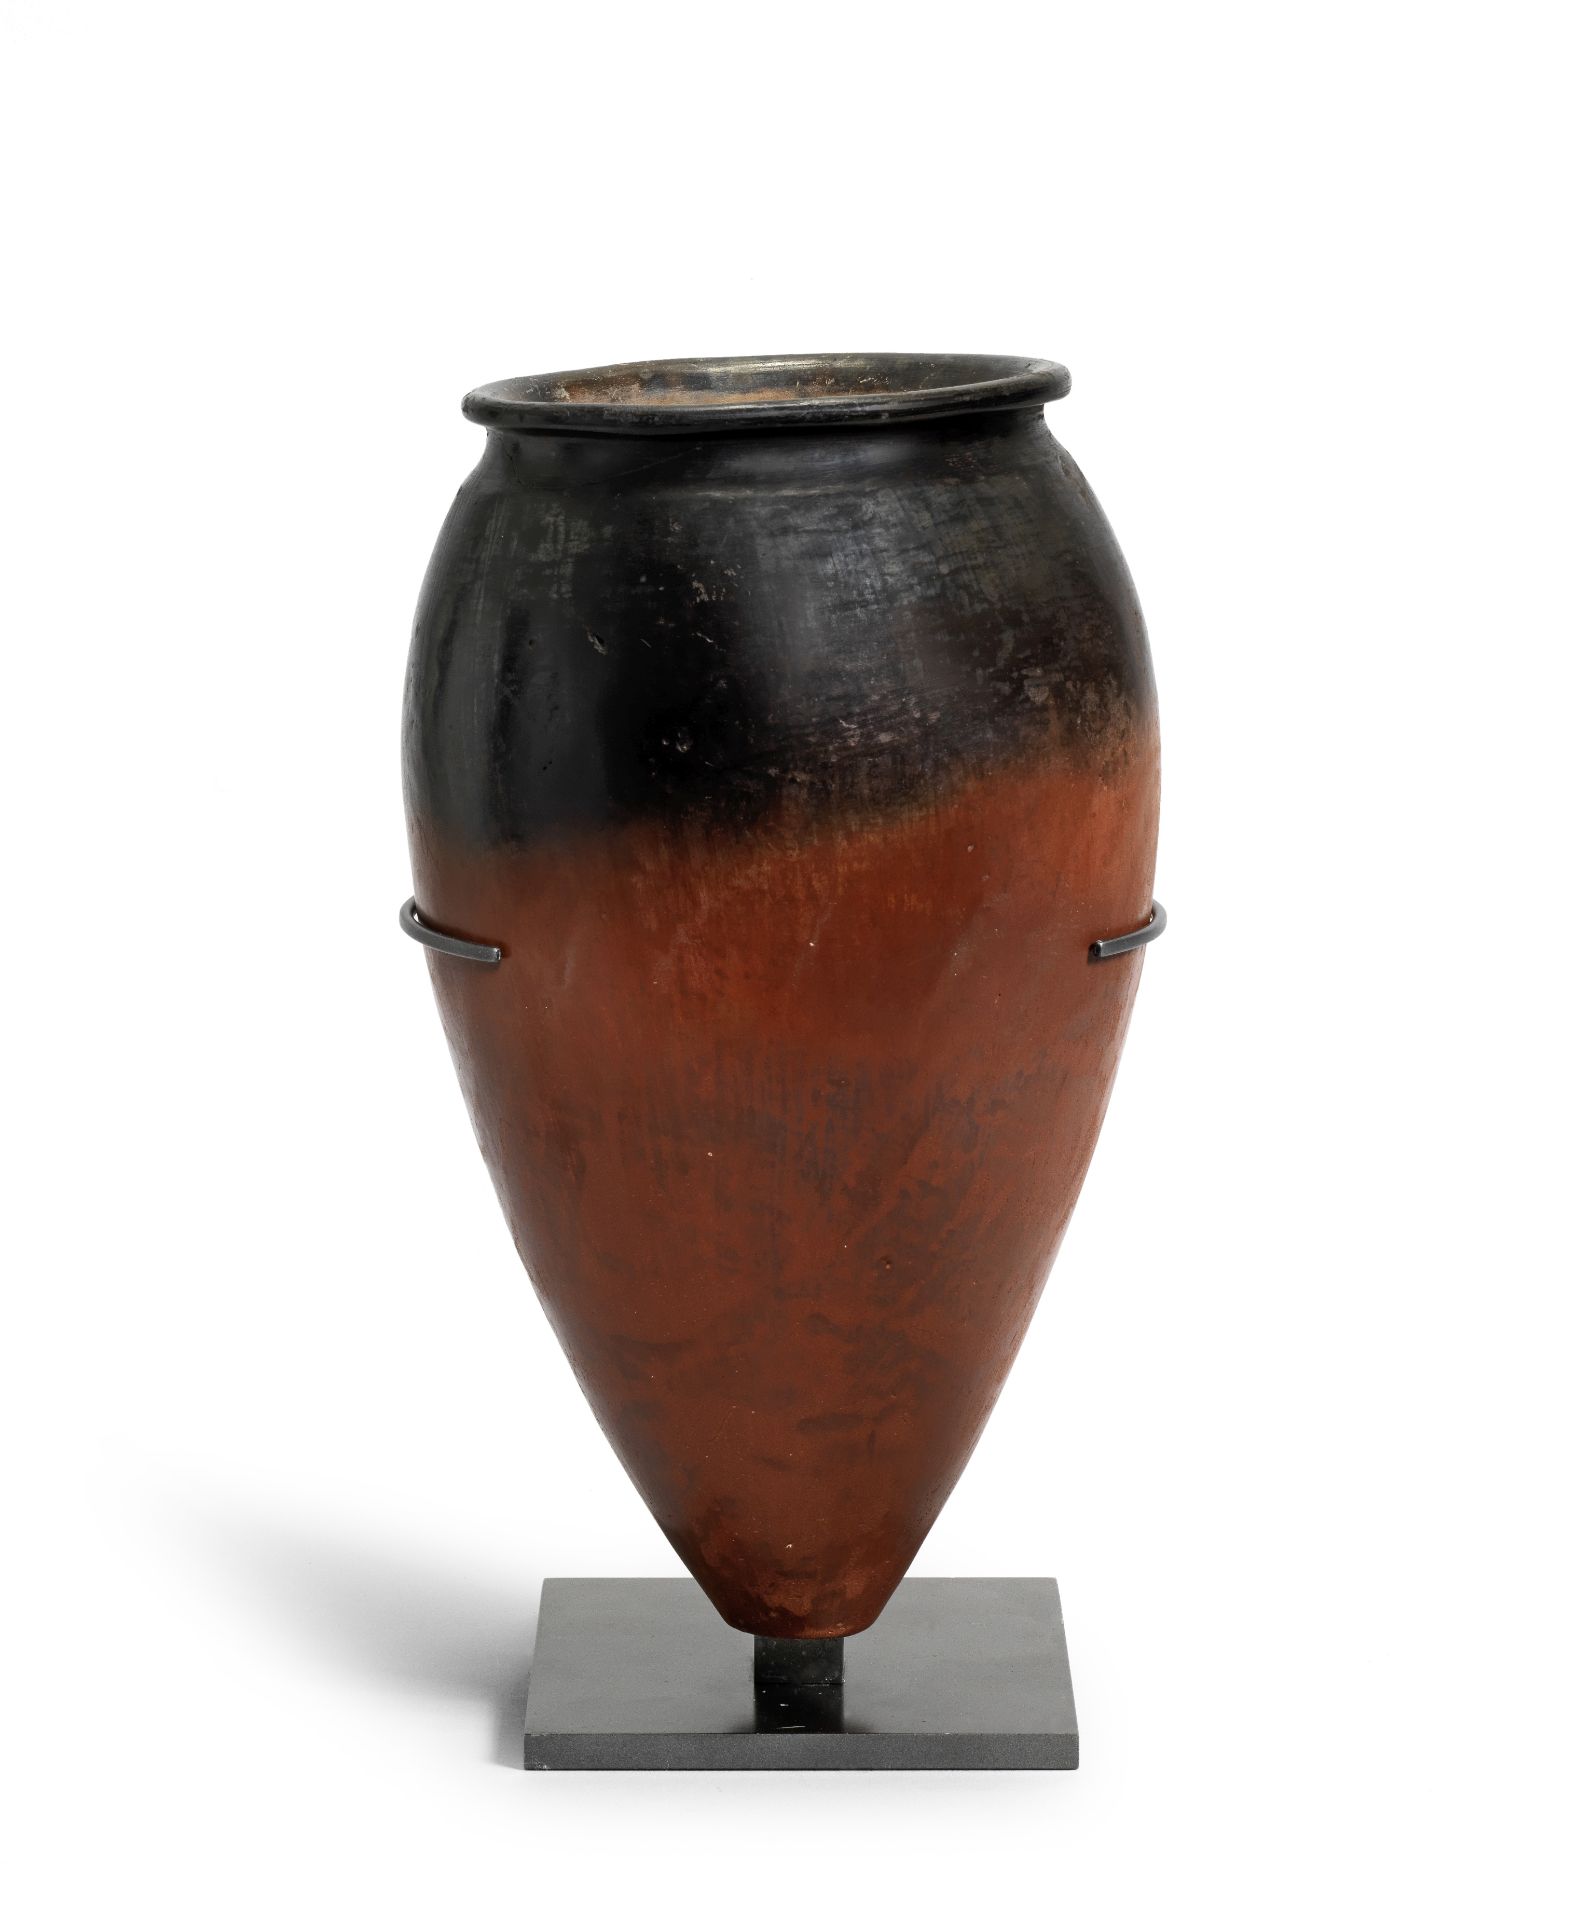 A large Egyptian black-topped pottery jar